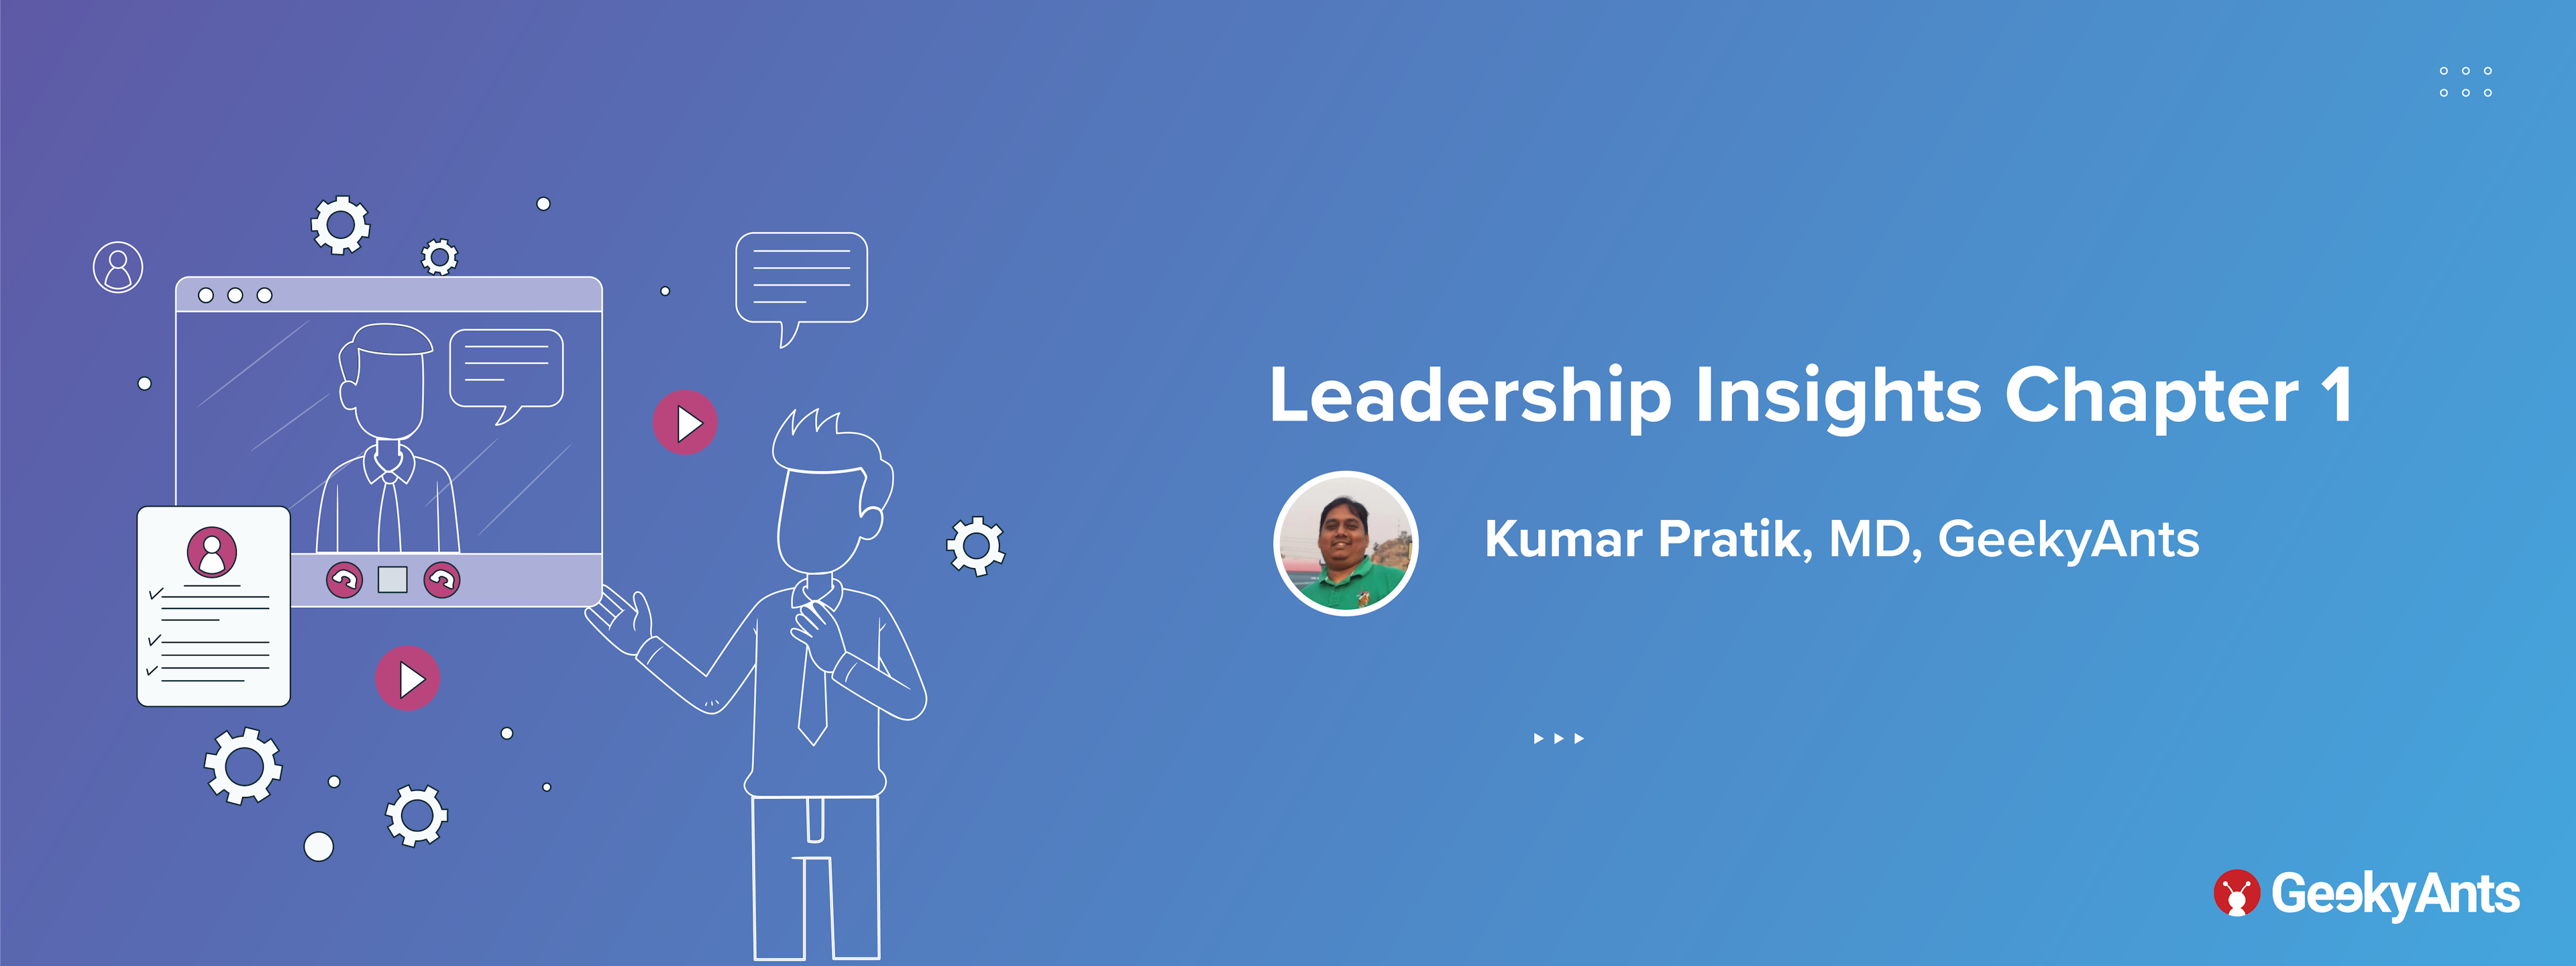 Leadership Insights Chapter 1: Kumar Pratik, MD, GeekyAnts